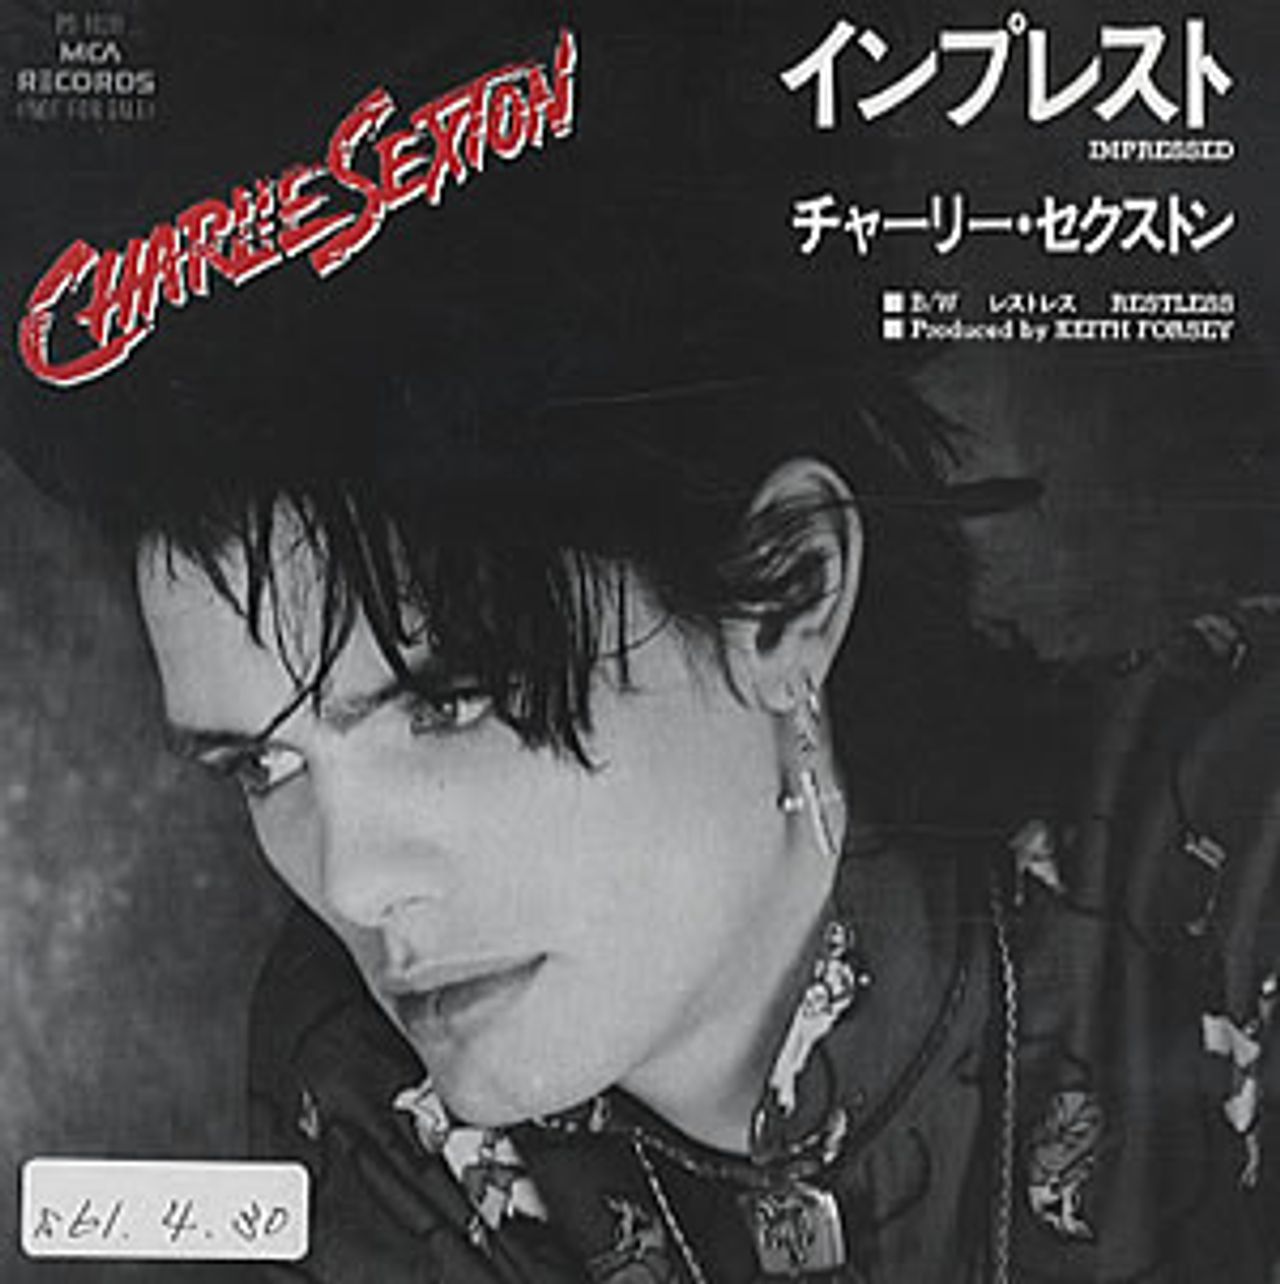 Charlie Sexton Impressed Japanese Promo 7" vinyl single (7 inch record / 45) PS-1039